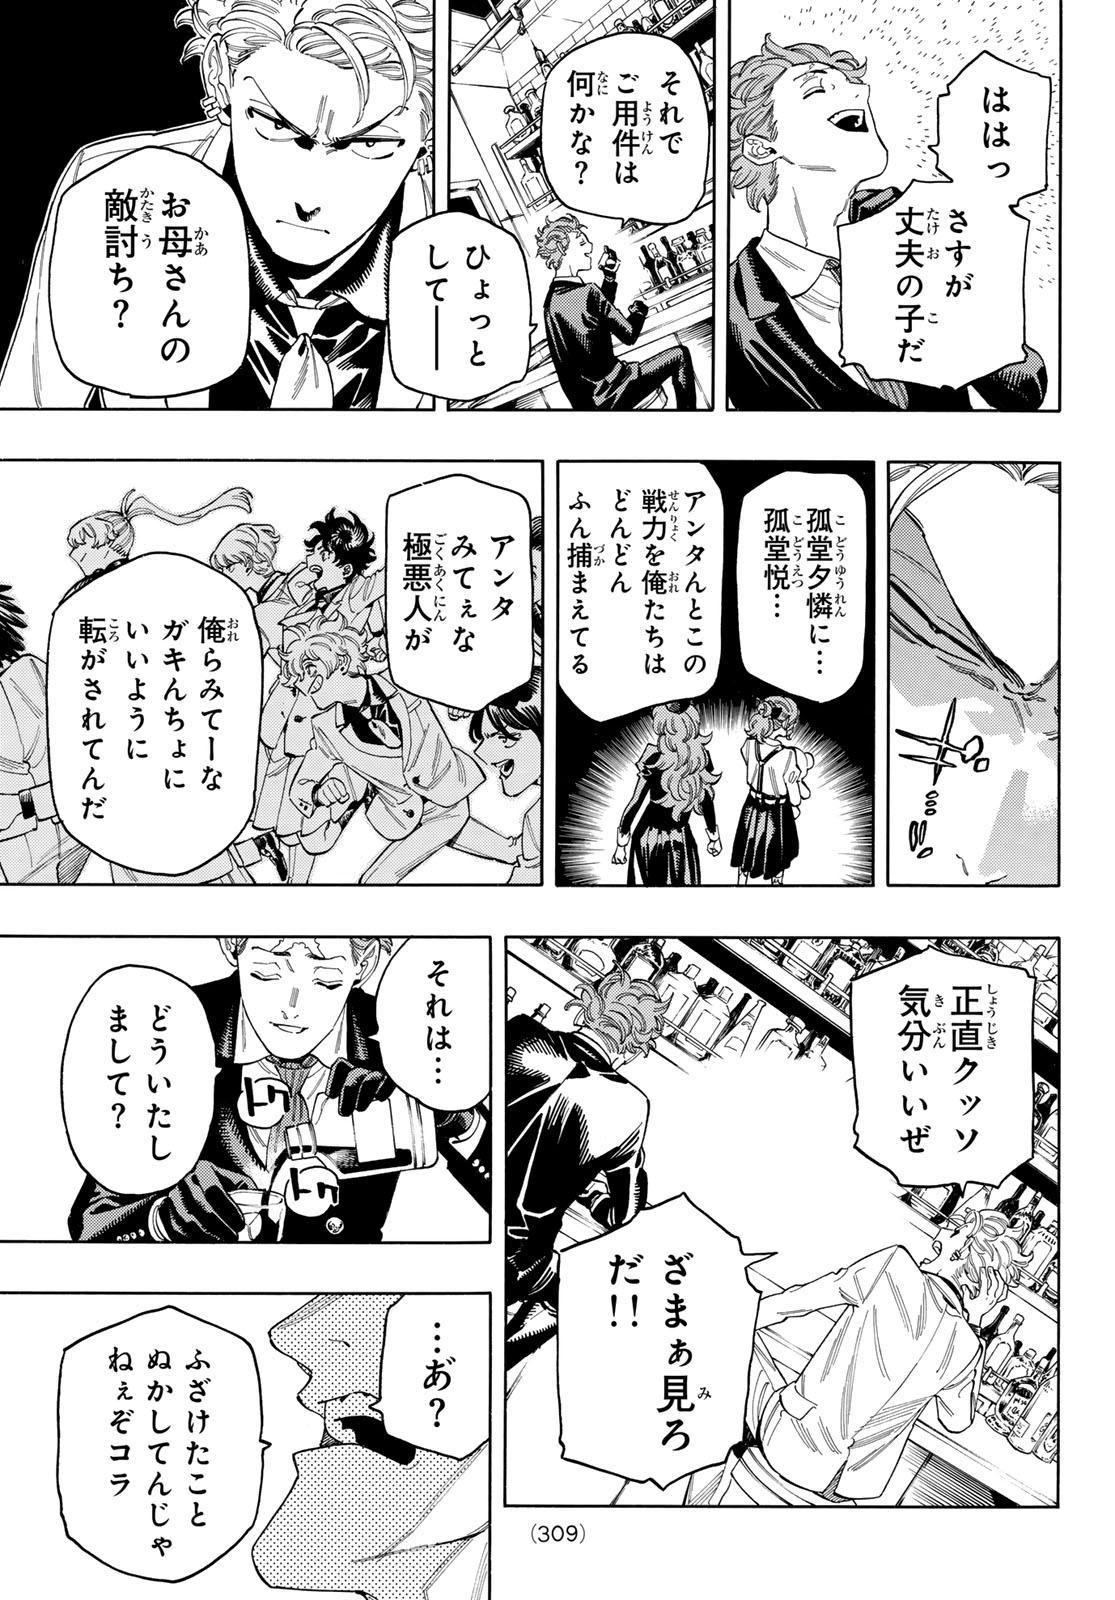 Akabane Honeko no Bodyguard - Chapter 84 - Page 3